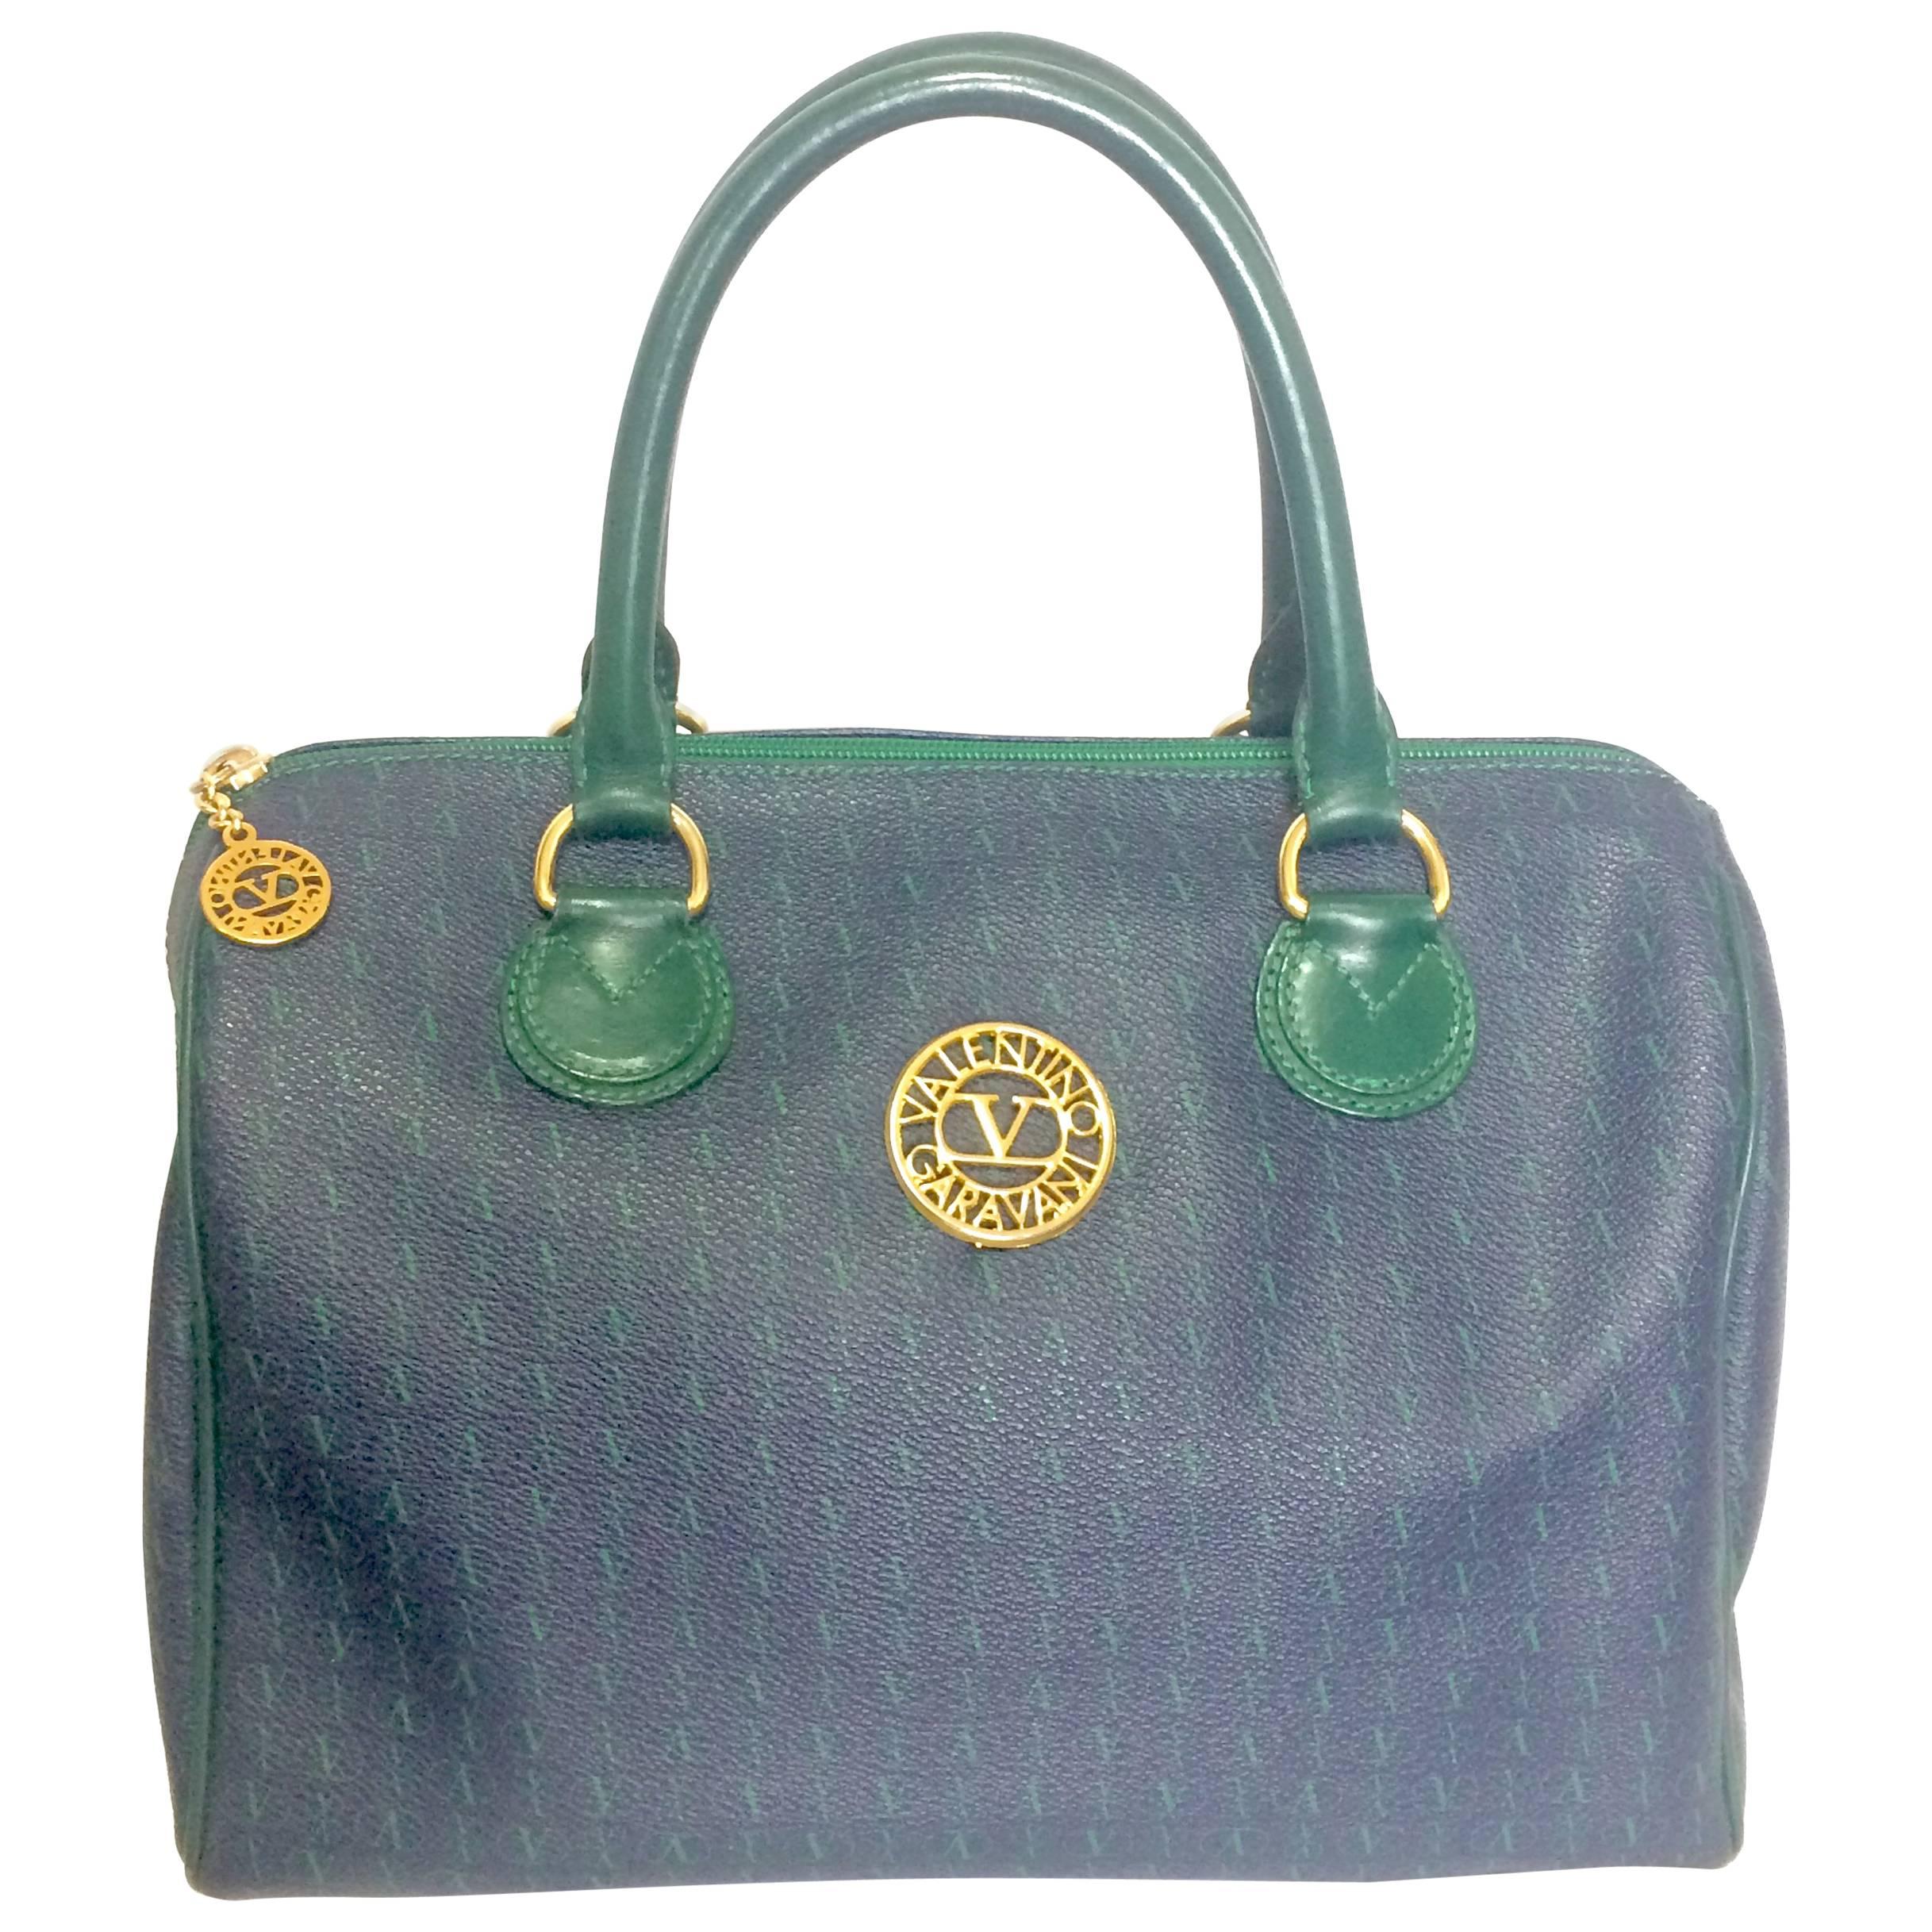 Vintage Valentino Garavani blue and green speedy handbag with logo motifs. For Sale